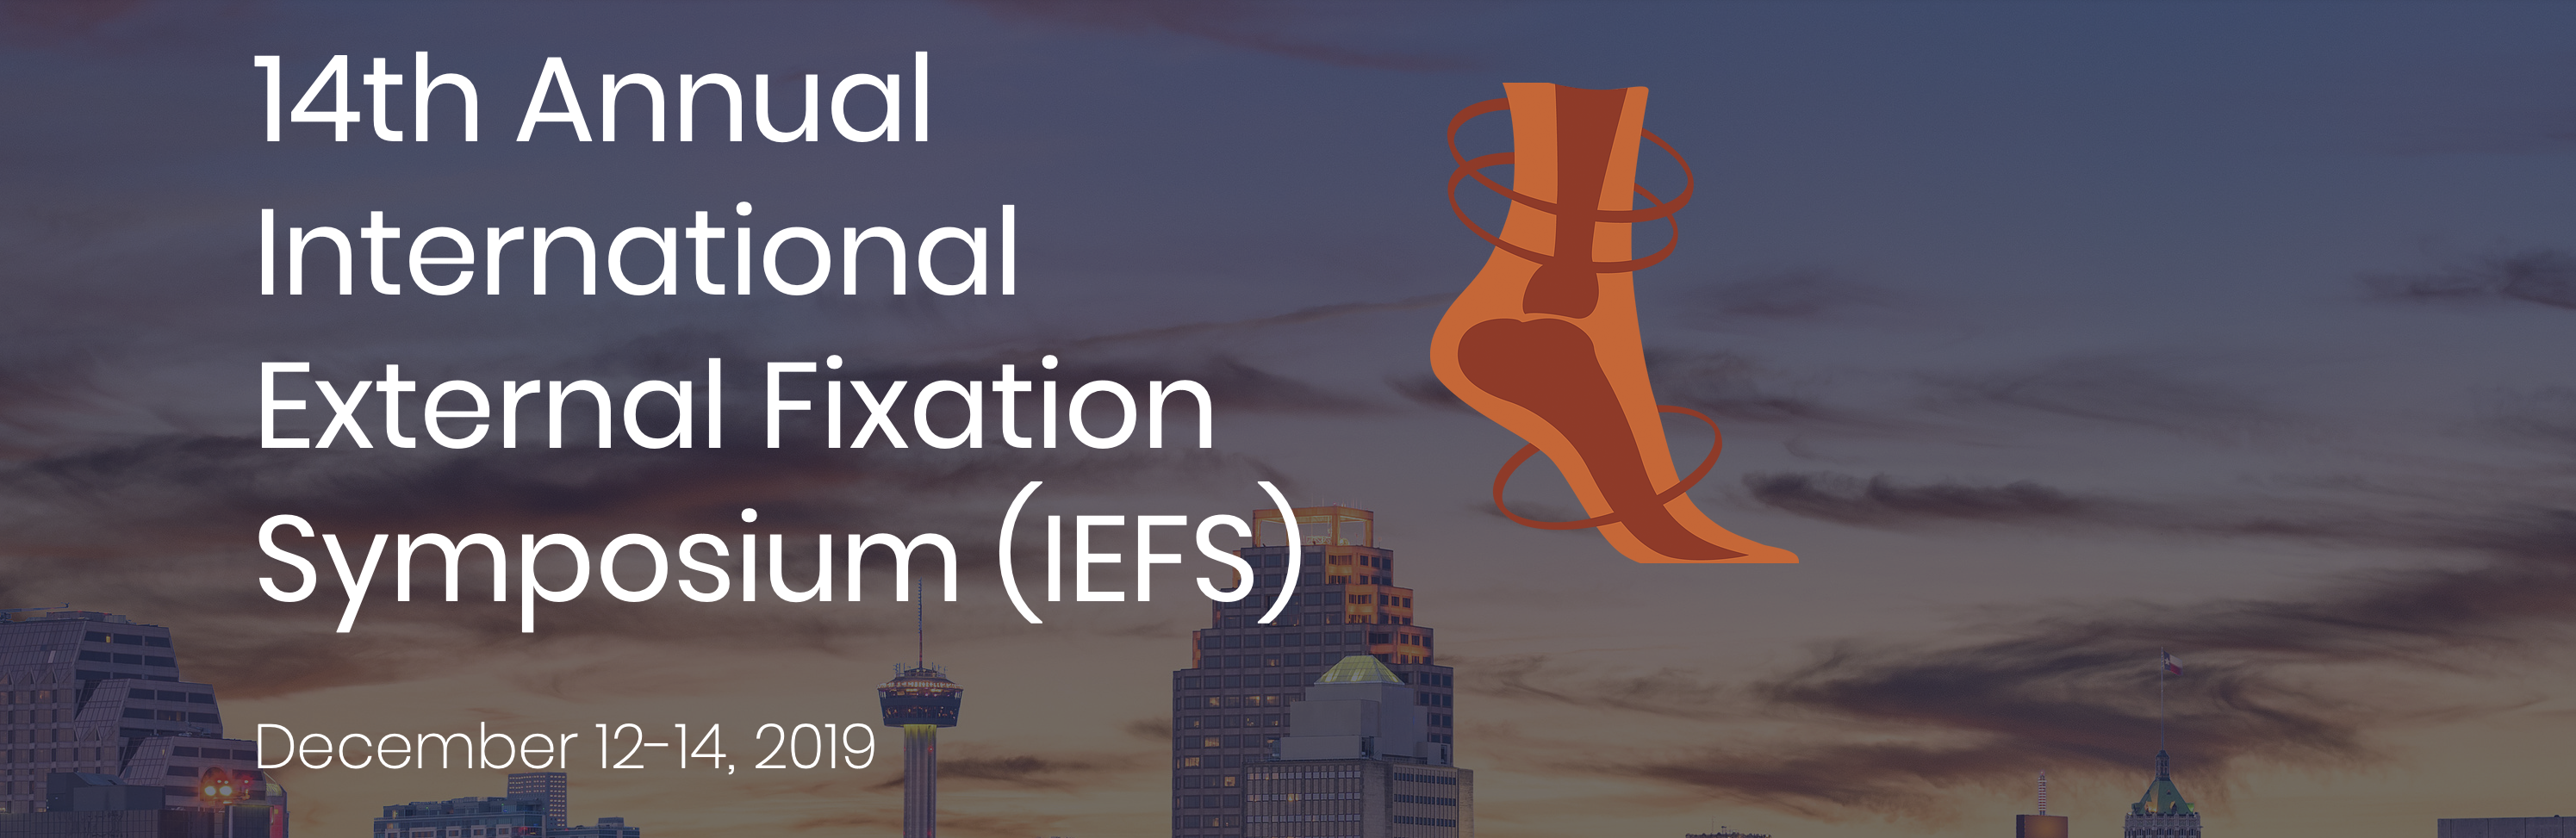 14th Annual International External Fixation Symposium (IEFS)